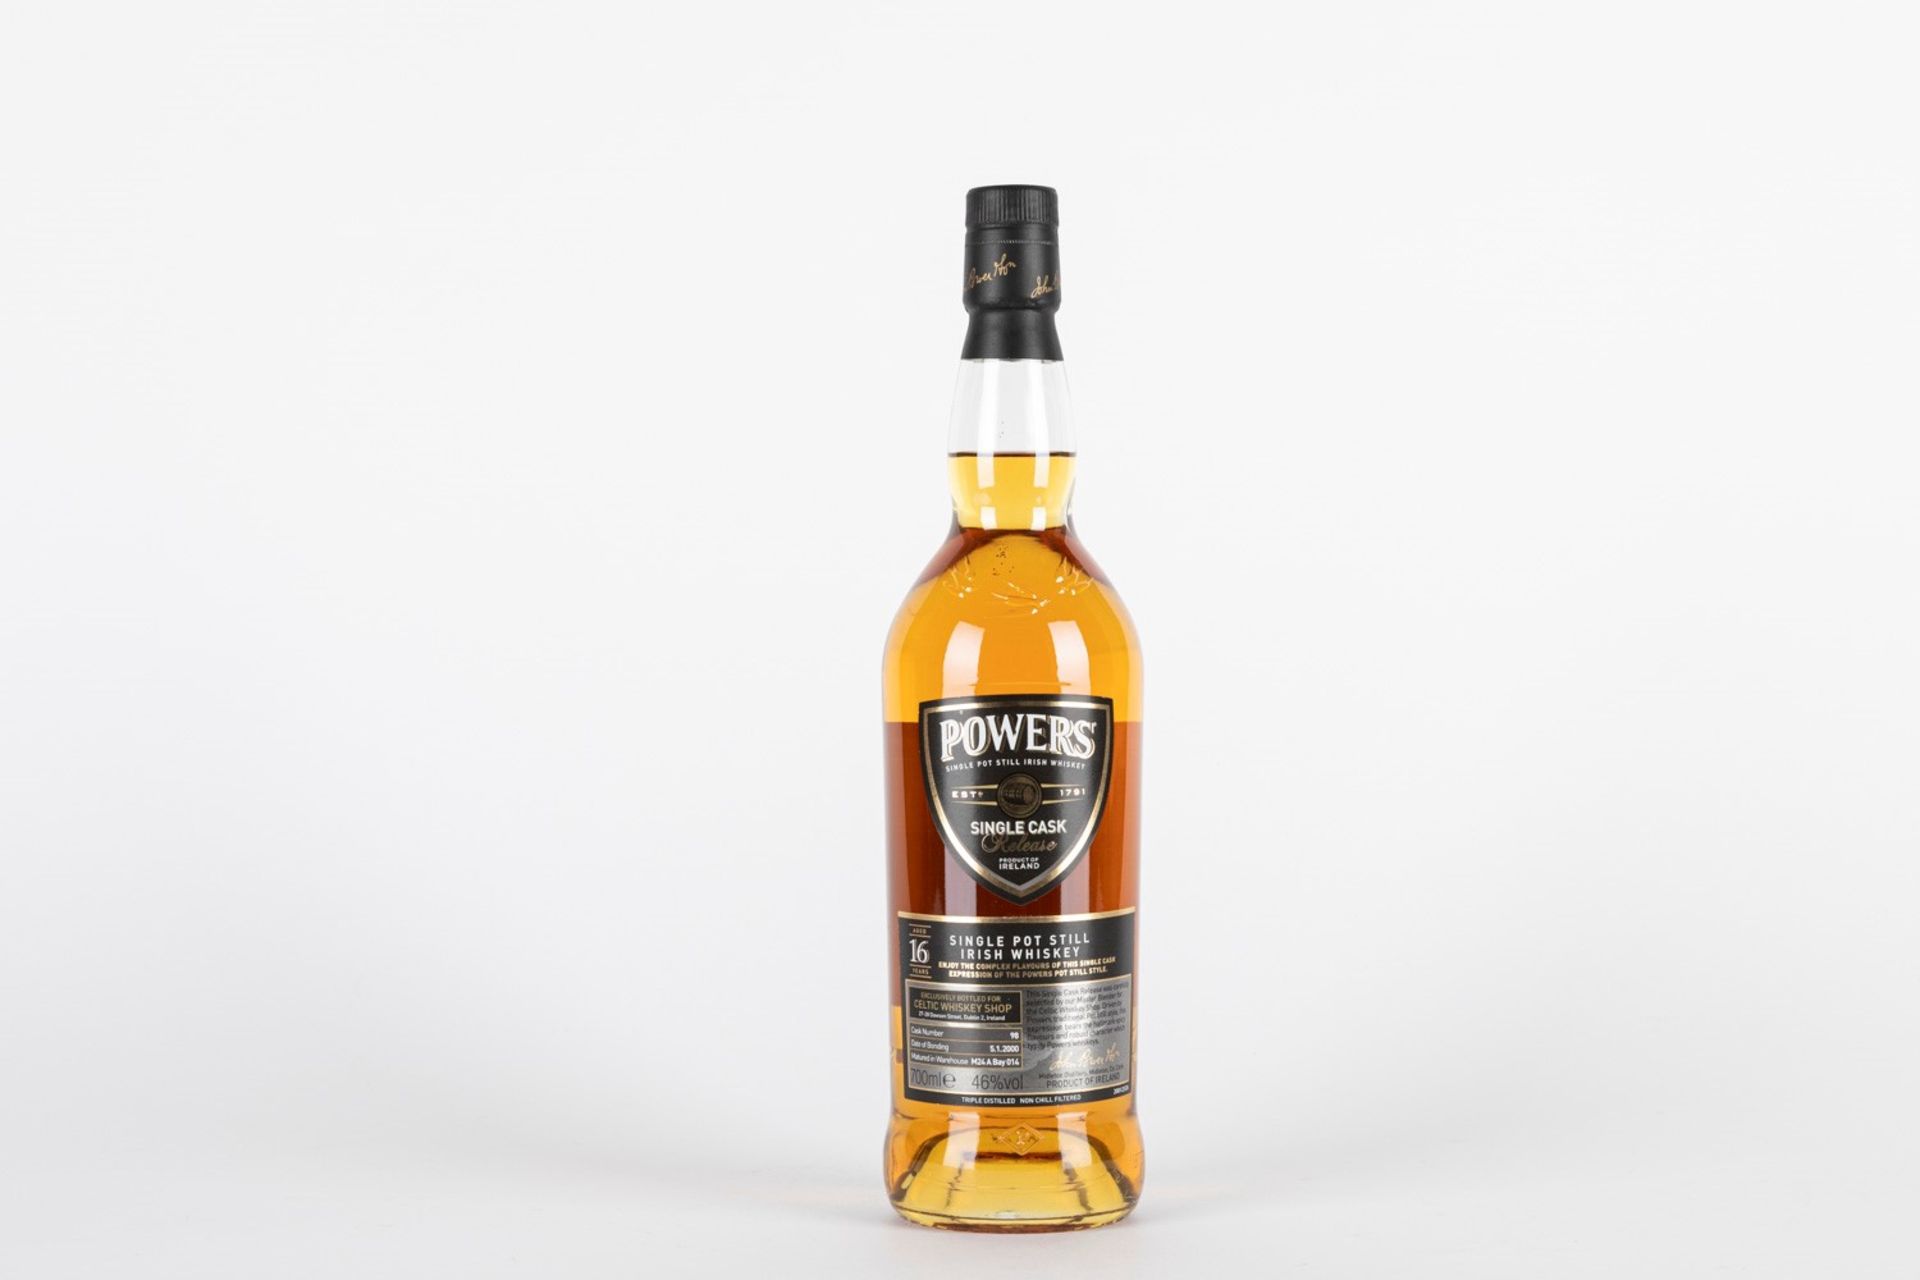 Irlanda - Whisky / Powers Single Cask Release 16 Year Old Single Pot Still Irish Whiskey